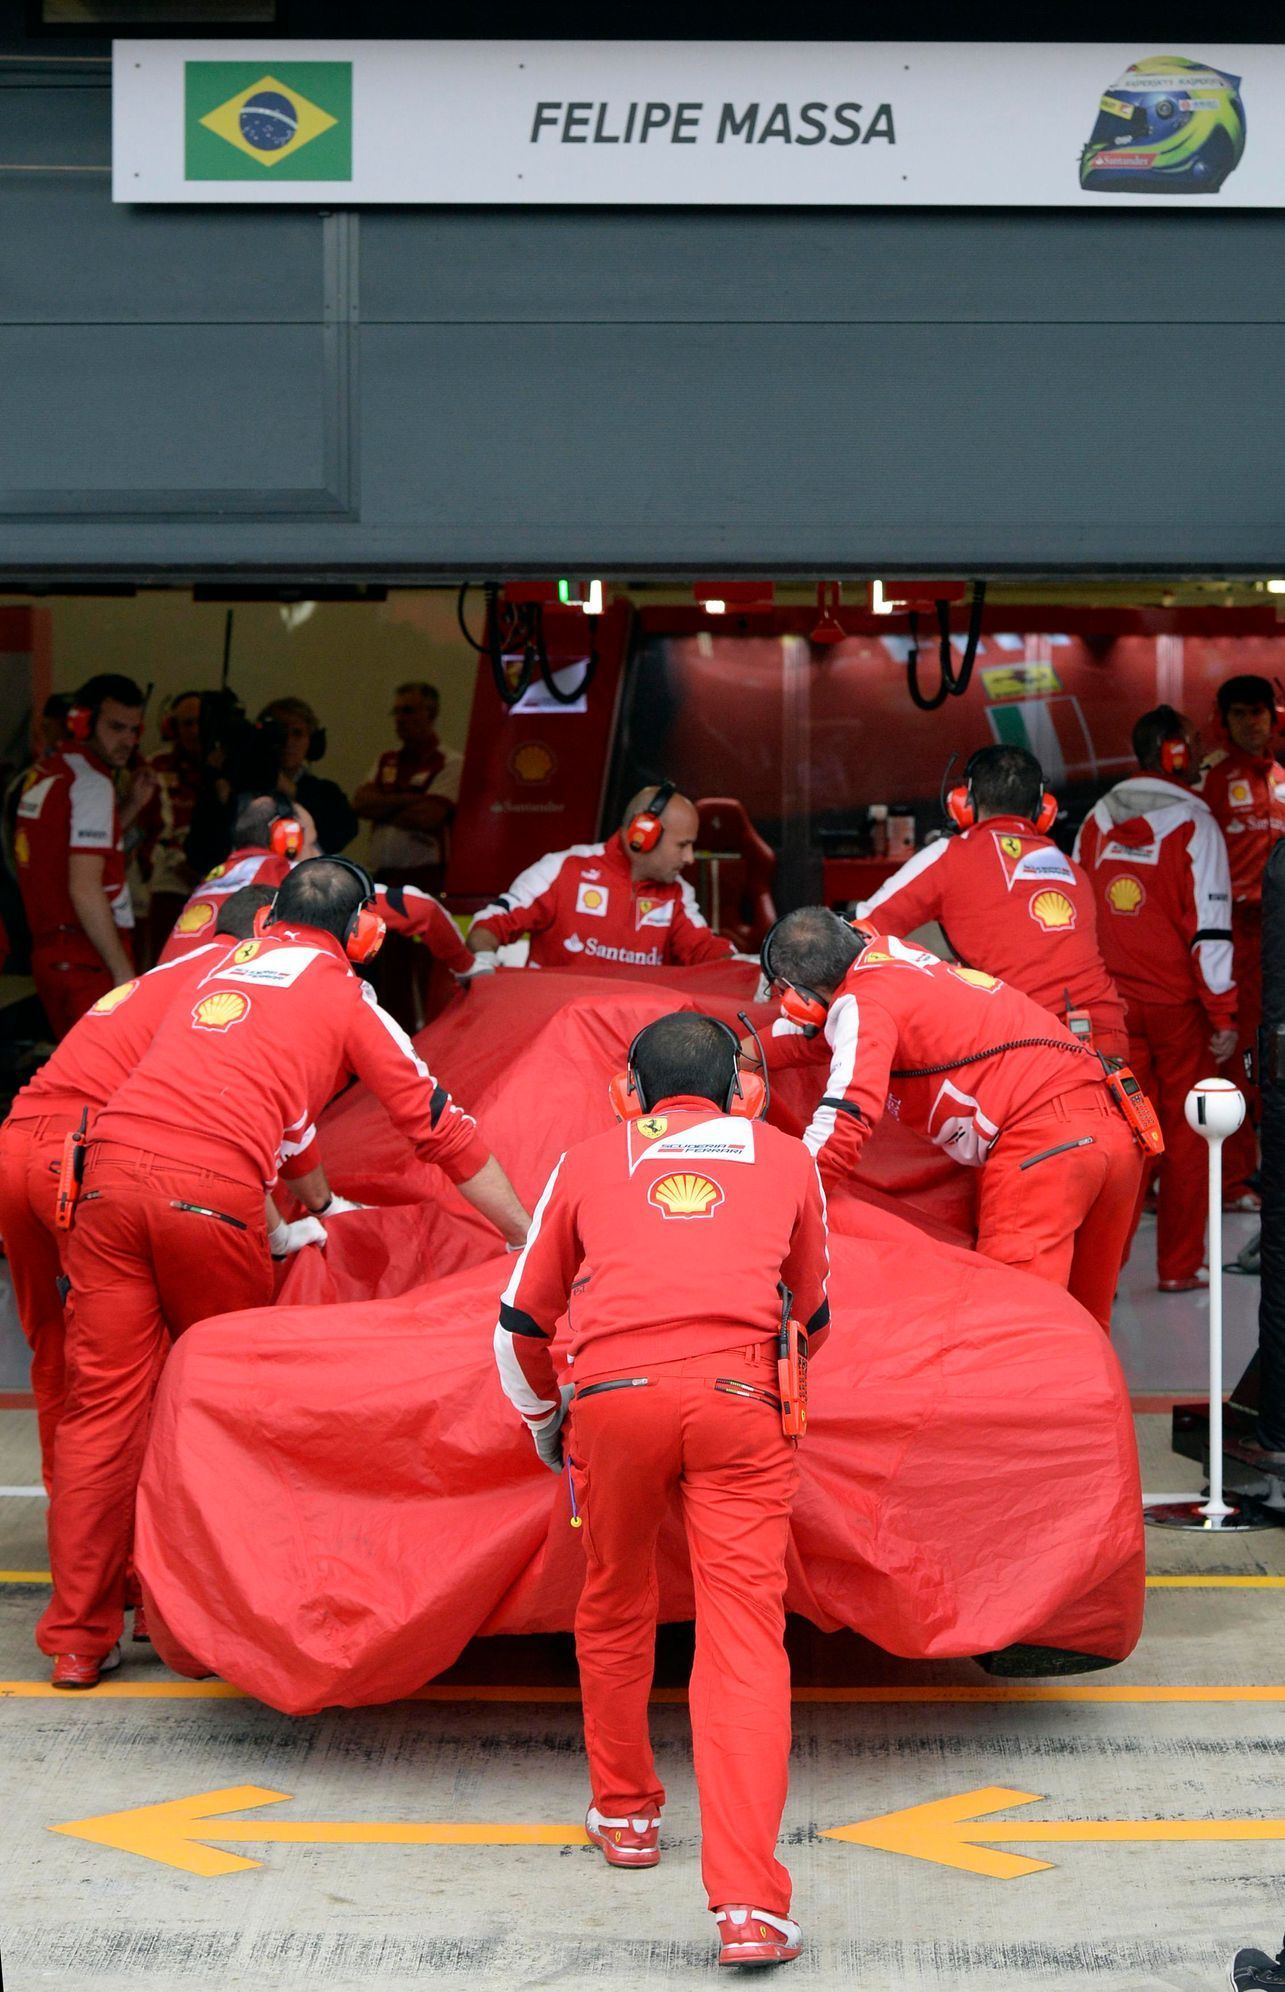 Engineers push the car of Ferrari Formula One driver Felipe